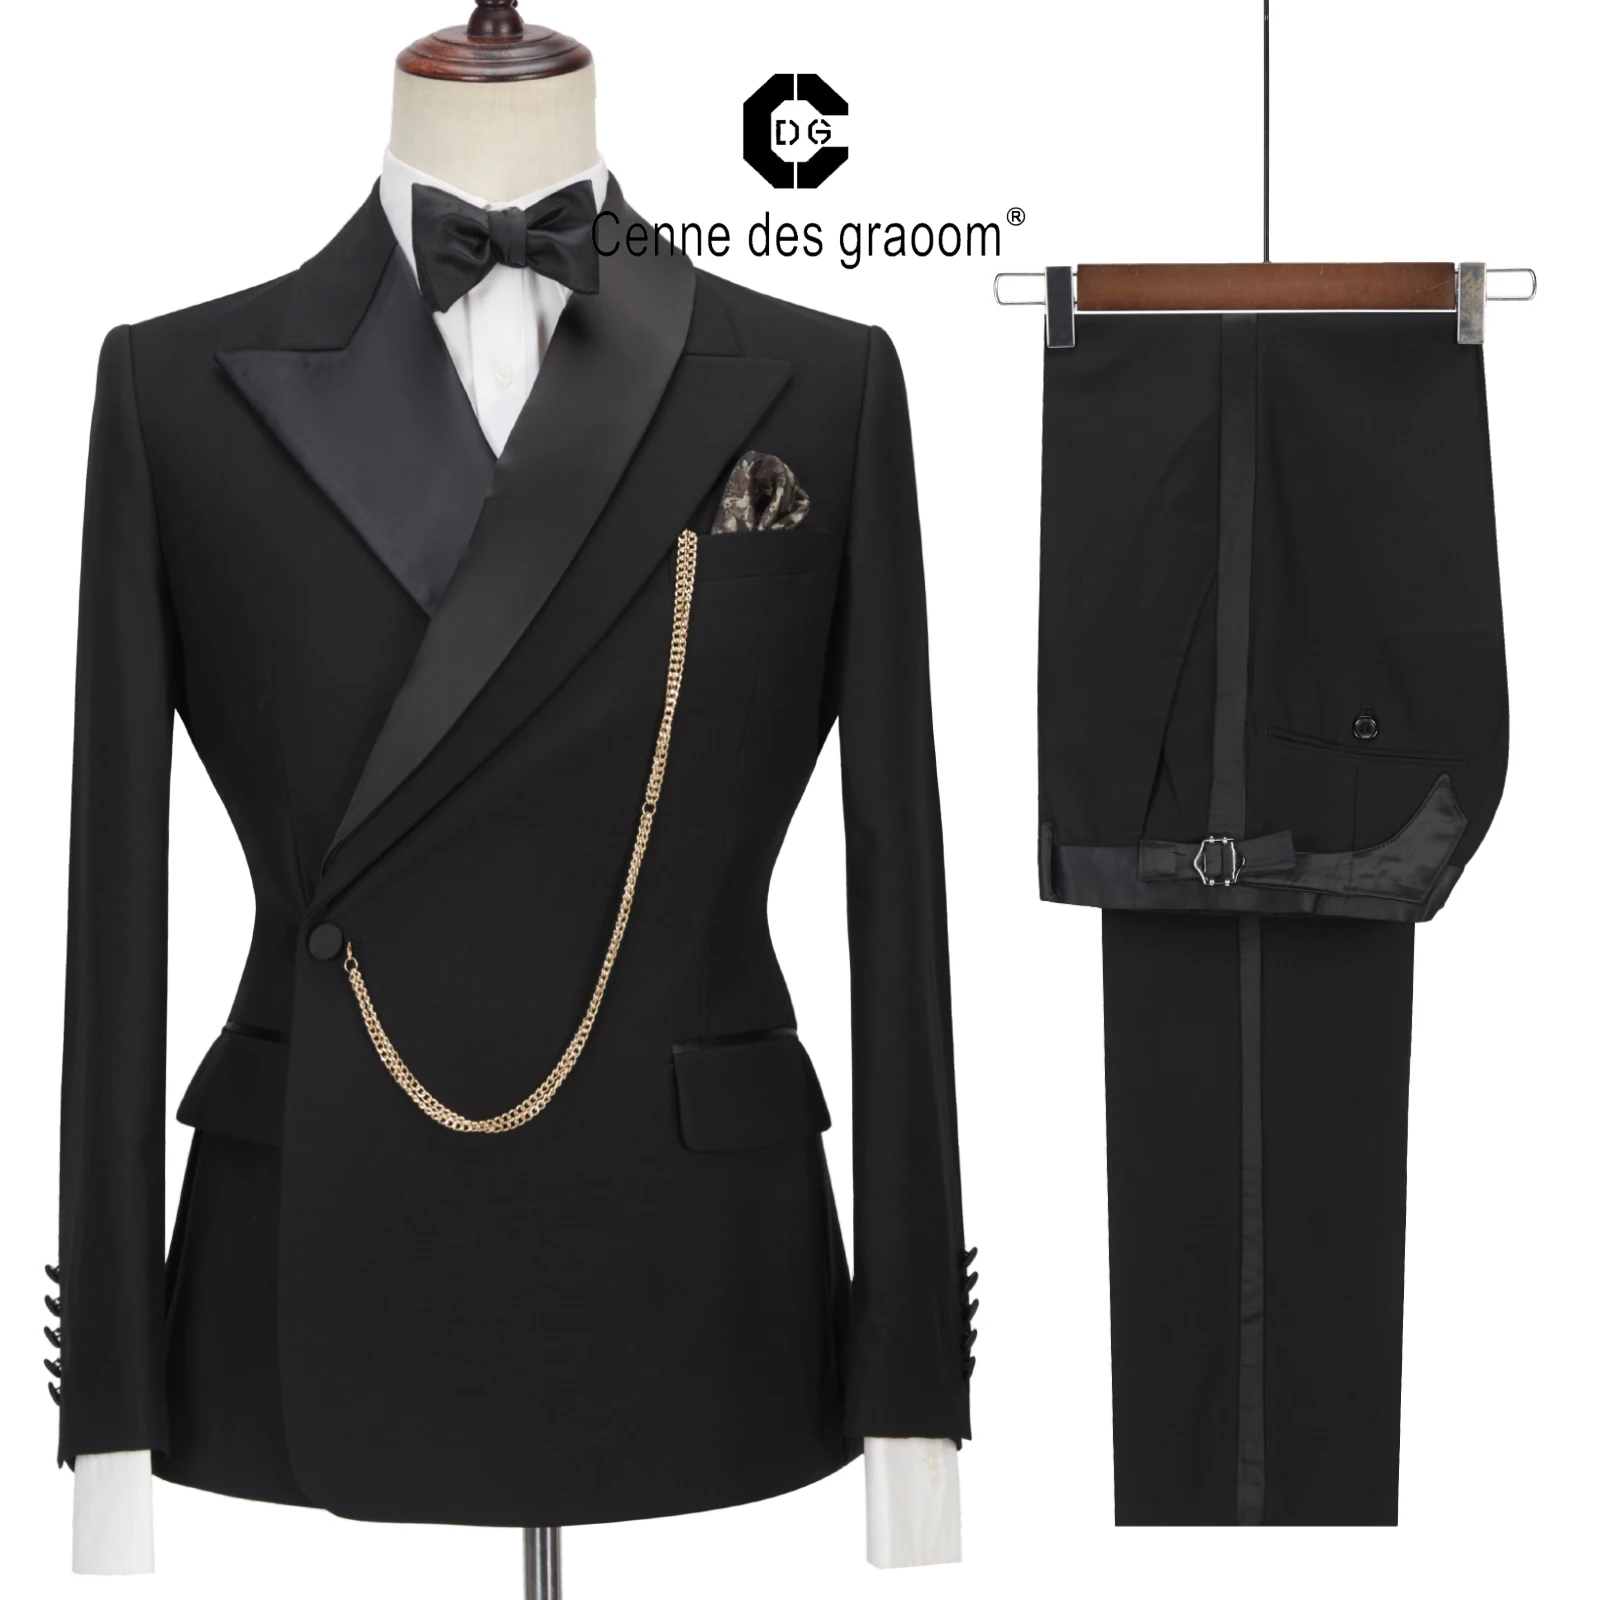 

Cenne Des Graoom Latest Coat Design Men Suits Tailor-Made Tuxedo 2 Pieces Blazer Wedding Party Singer Groom Costume Homme Black, White